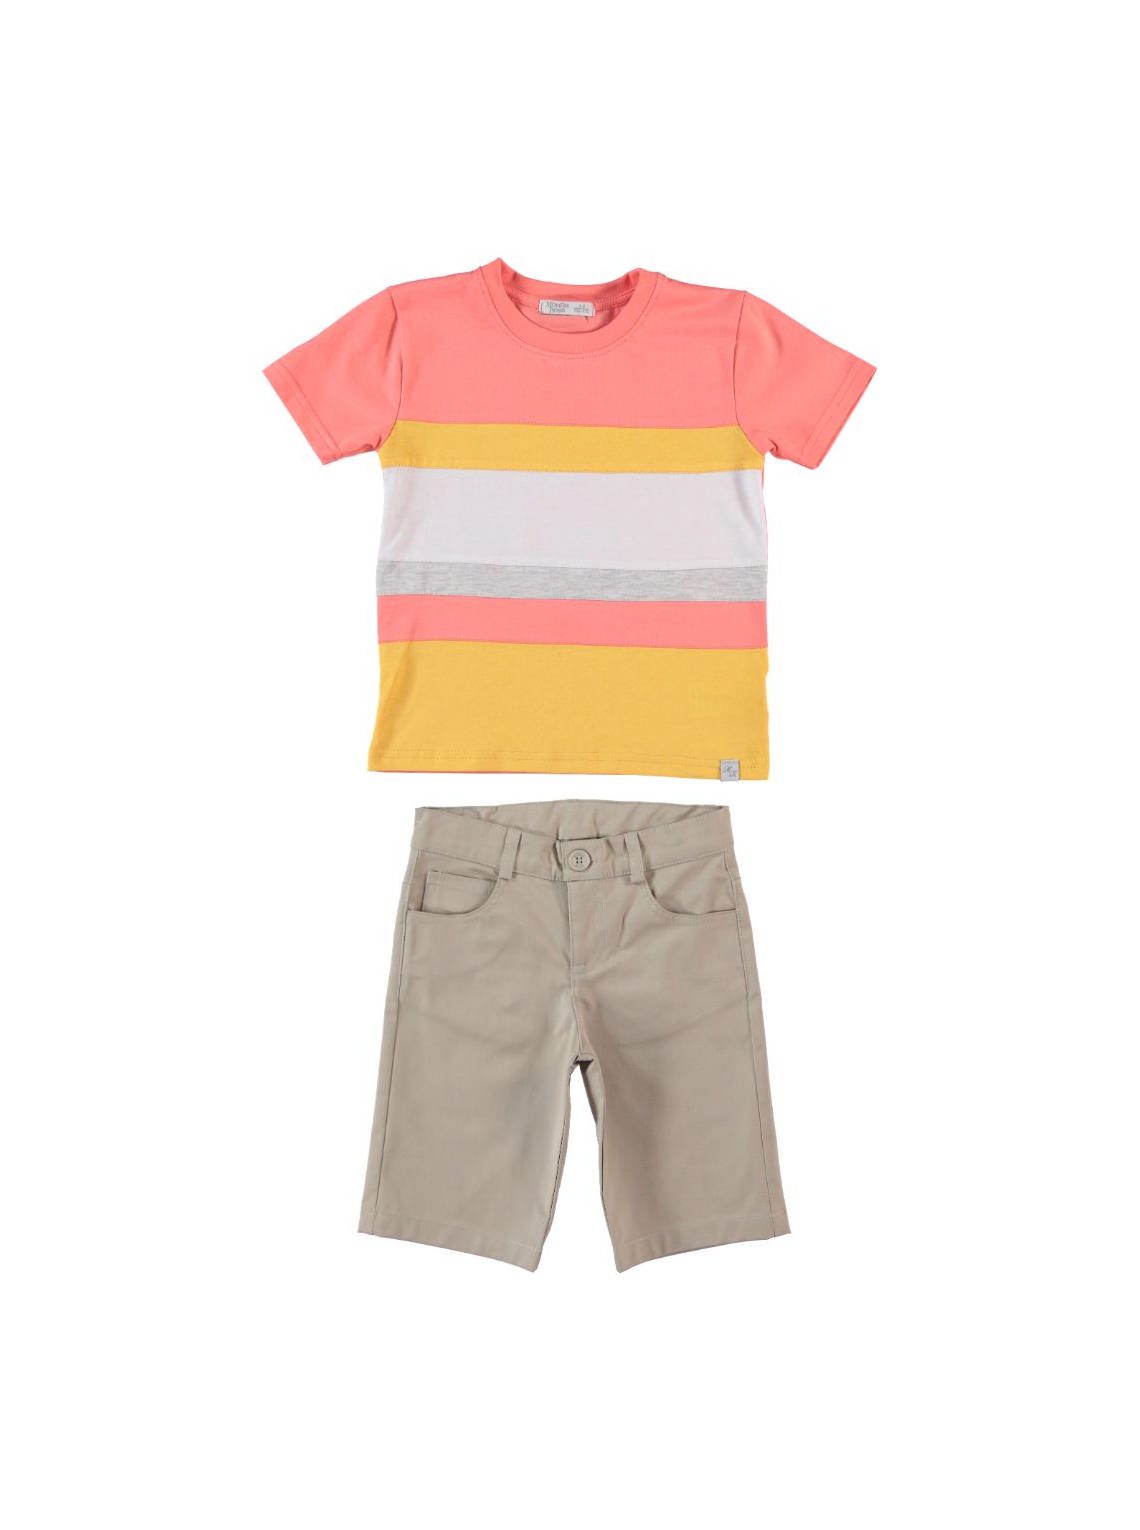 Exclusive Brand - Girl Striped Set ( Pants + T-Shirt ) / 2-3Y | 3-4Y | 4-5Y | 5-6Y - Kids Fashion Turkey